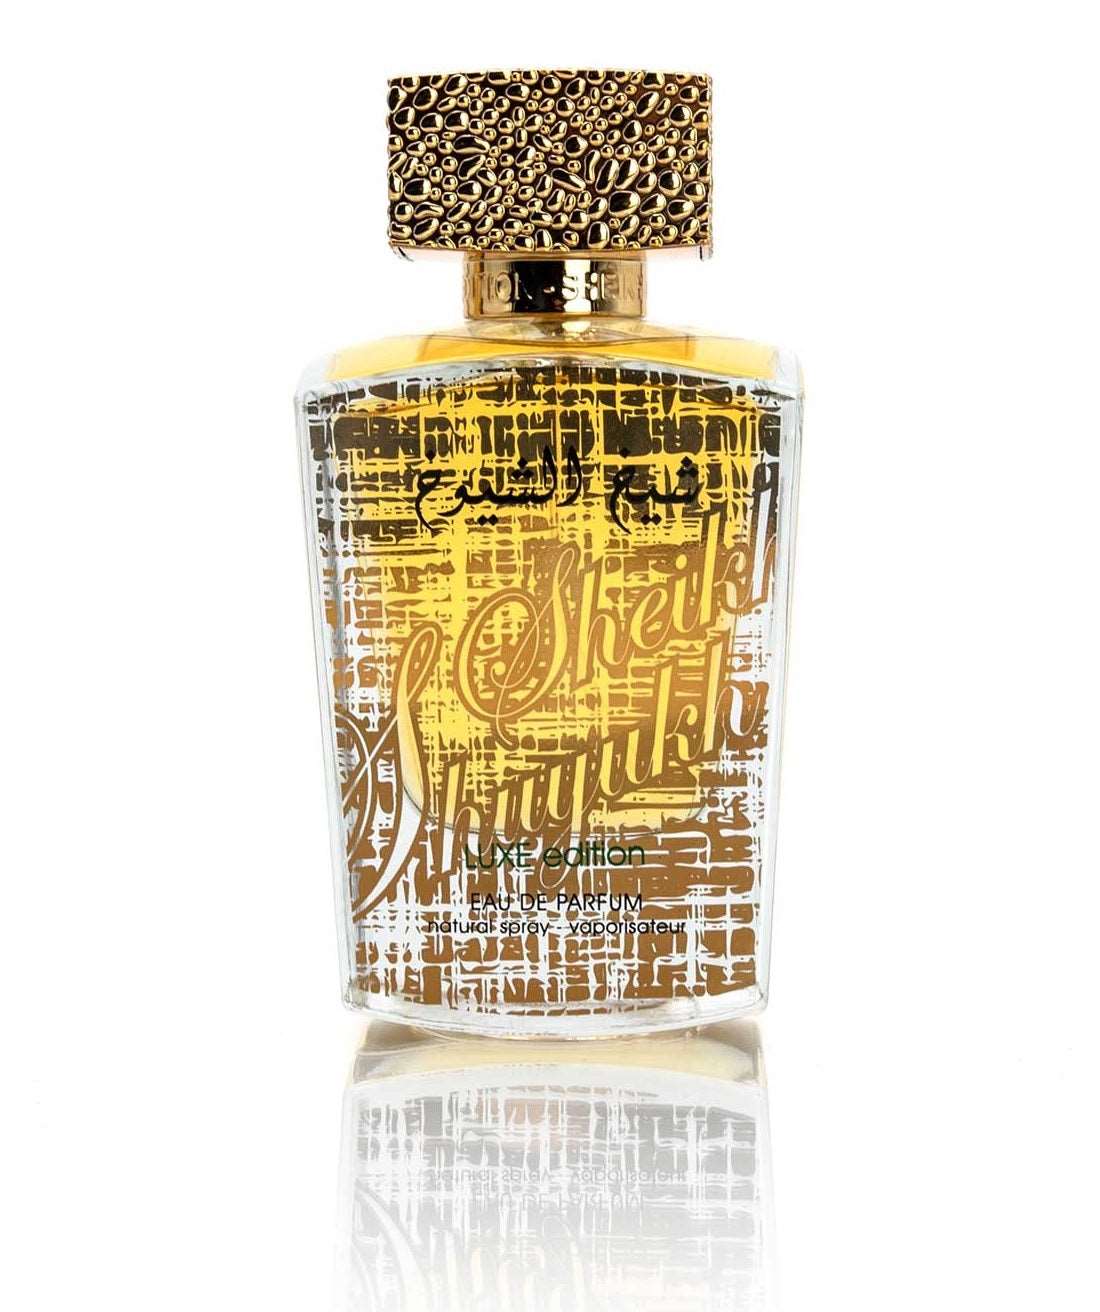 Sheikh Shuyukh Luxe Edition 100ml - Lattafa Parfum